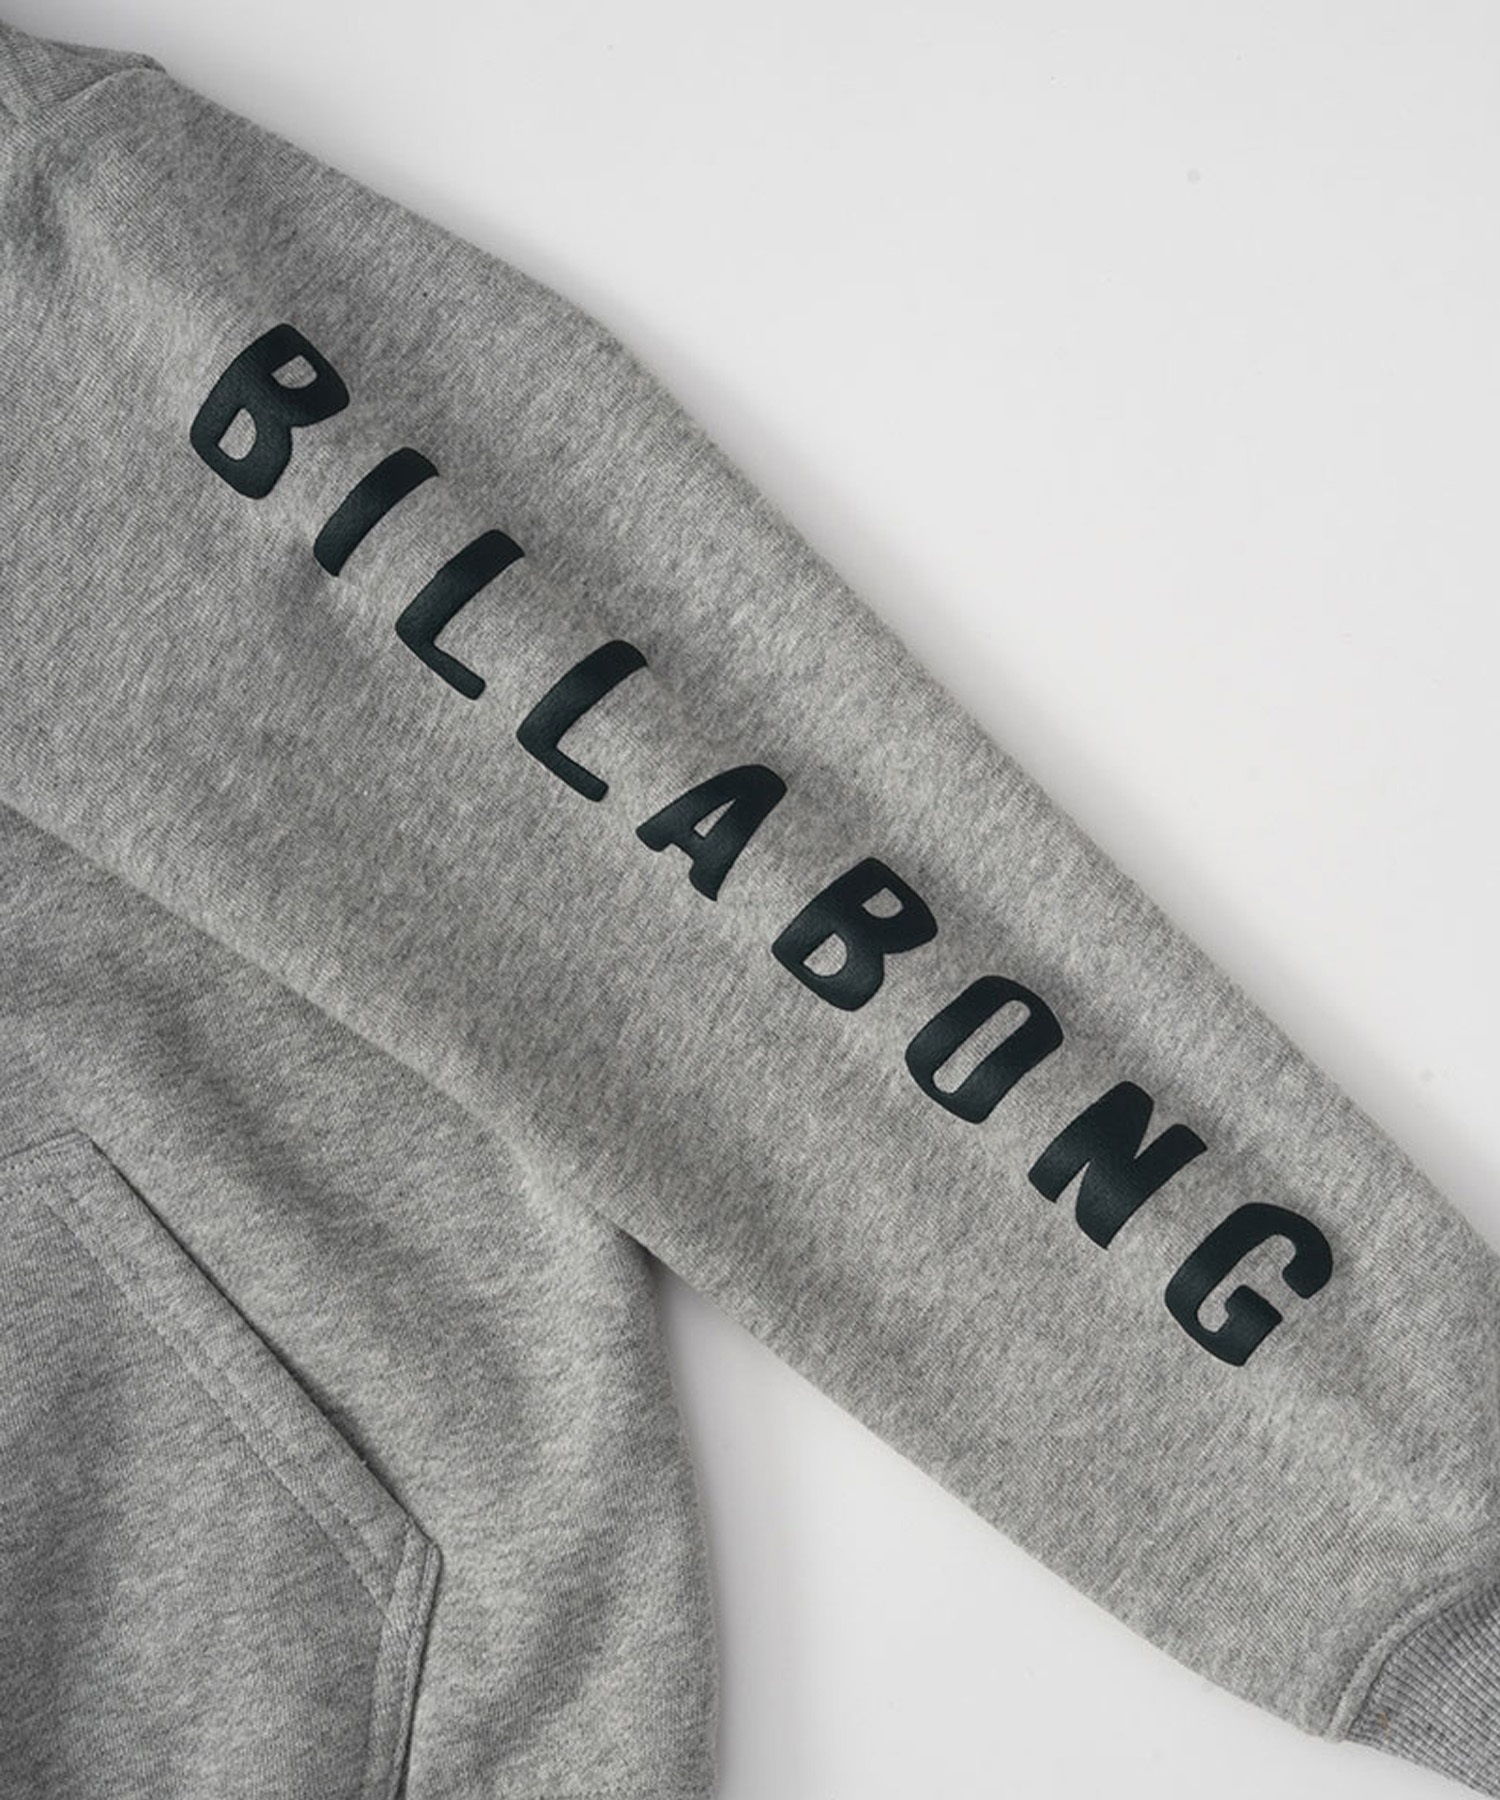 BILLABONG/ビラボン LOGO SET UP スウェットジャケット キッズ パーカー プルオーバー 裏起毛 親子コーデ セットアップ対応 BD016-004(GRH-130cm)